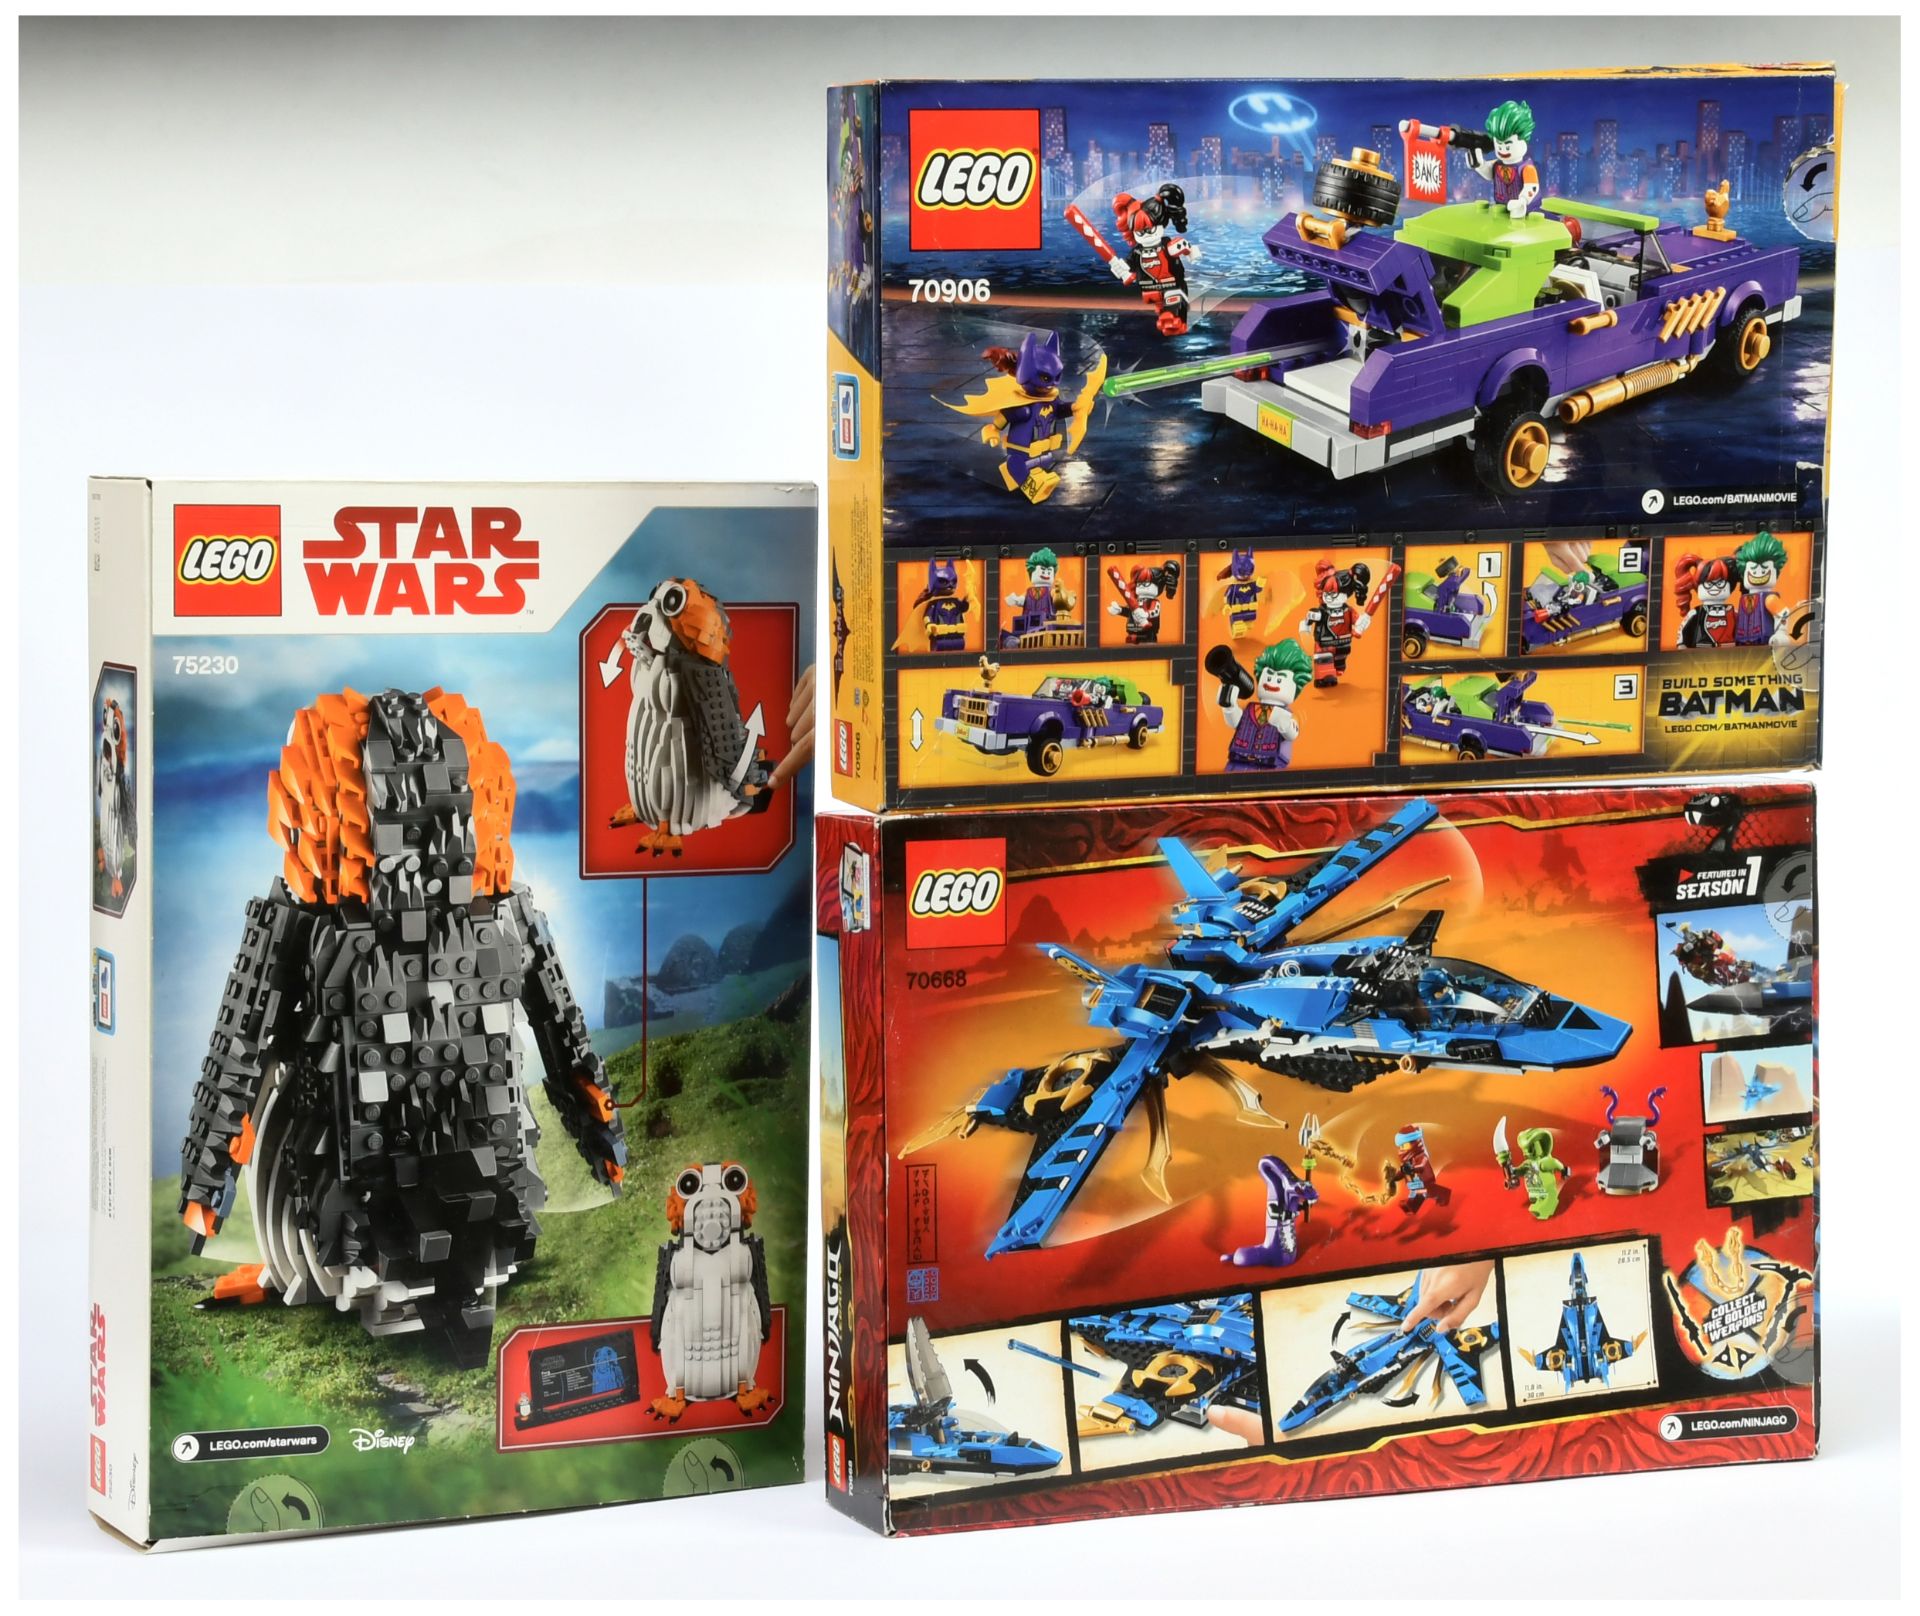 Lego mixed group (1) 70688 Ninjago Legacy Jay's Storm Fighter - Sealed Set (2) 70906 The Batman M... - Image 2 of 2